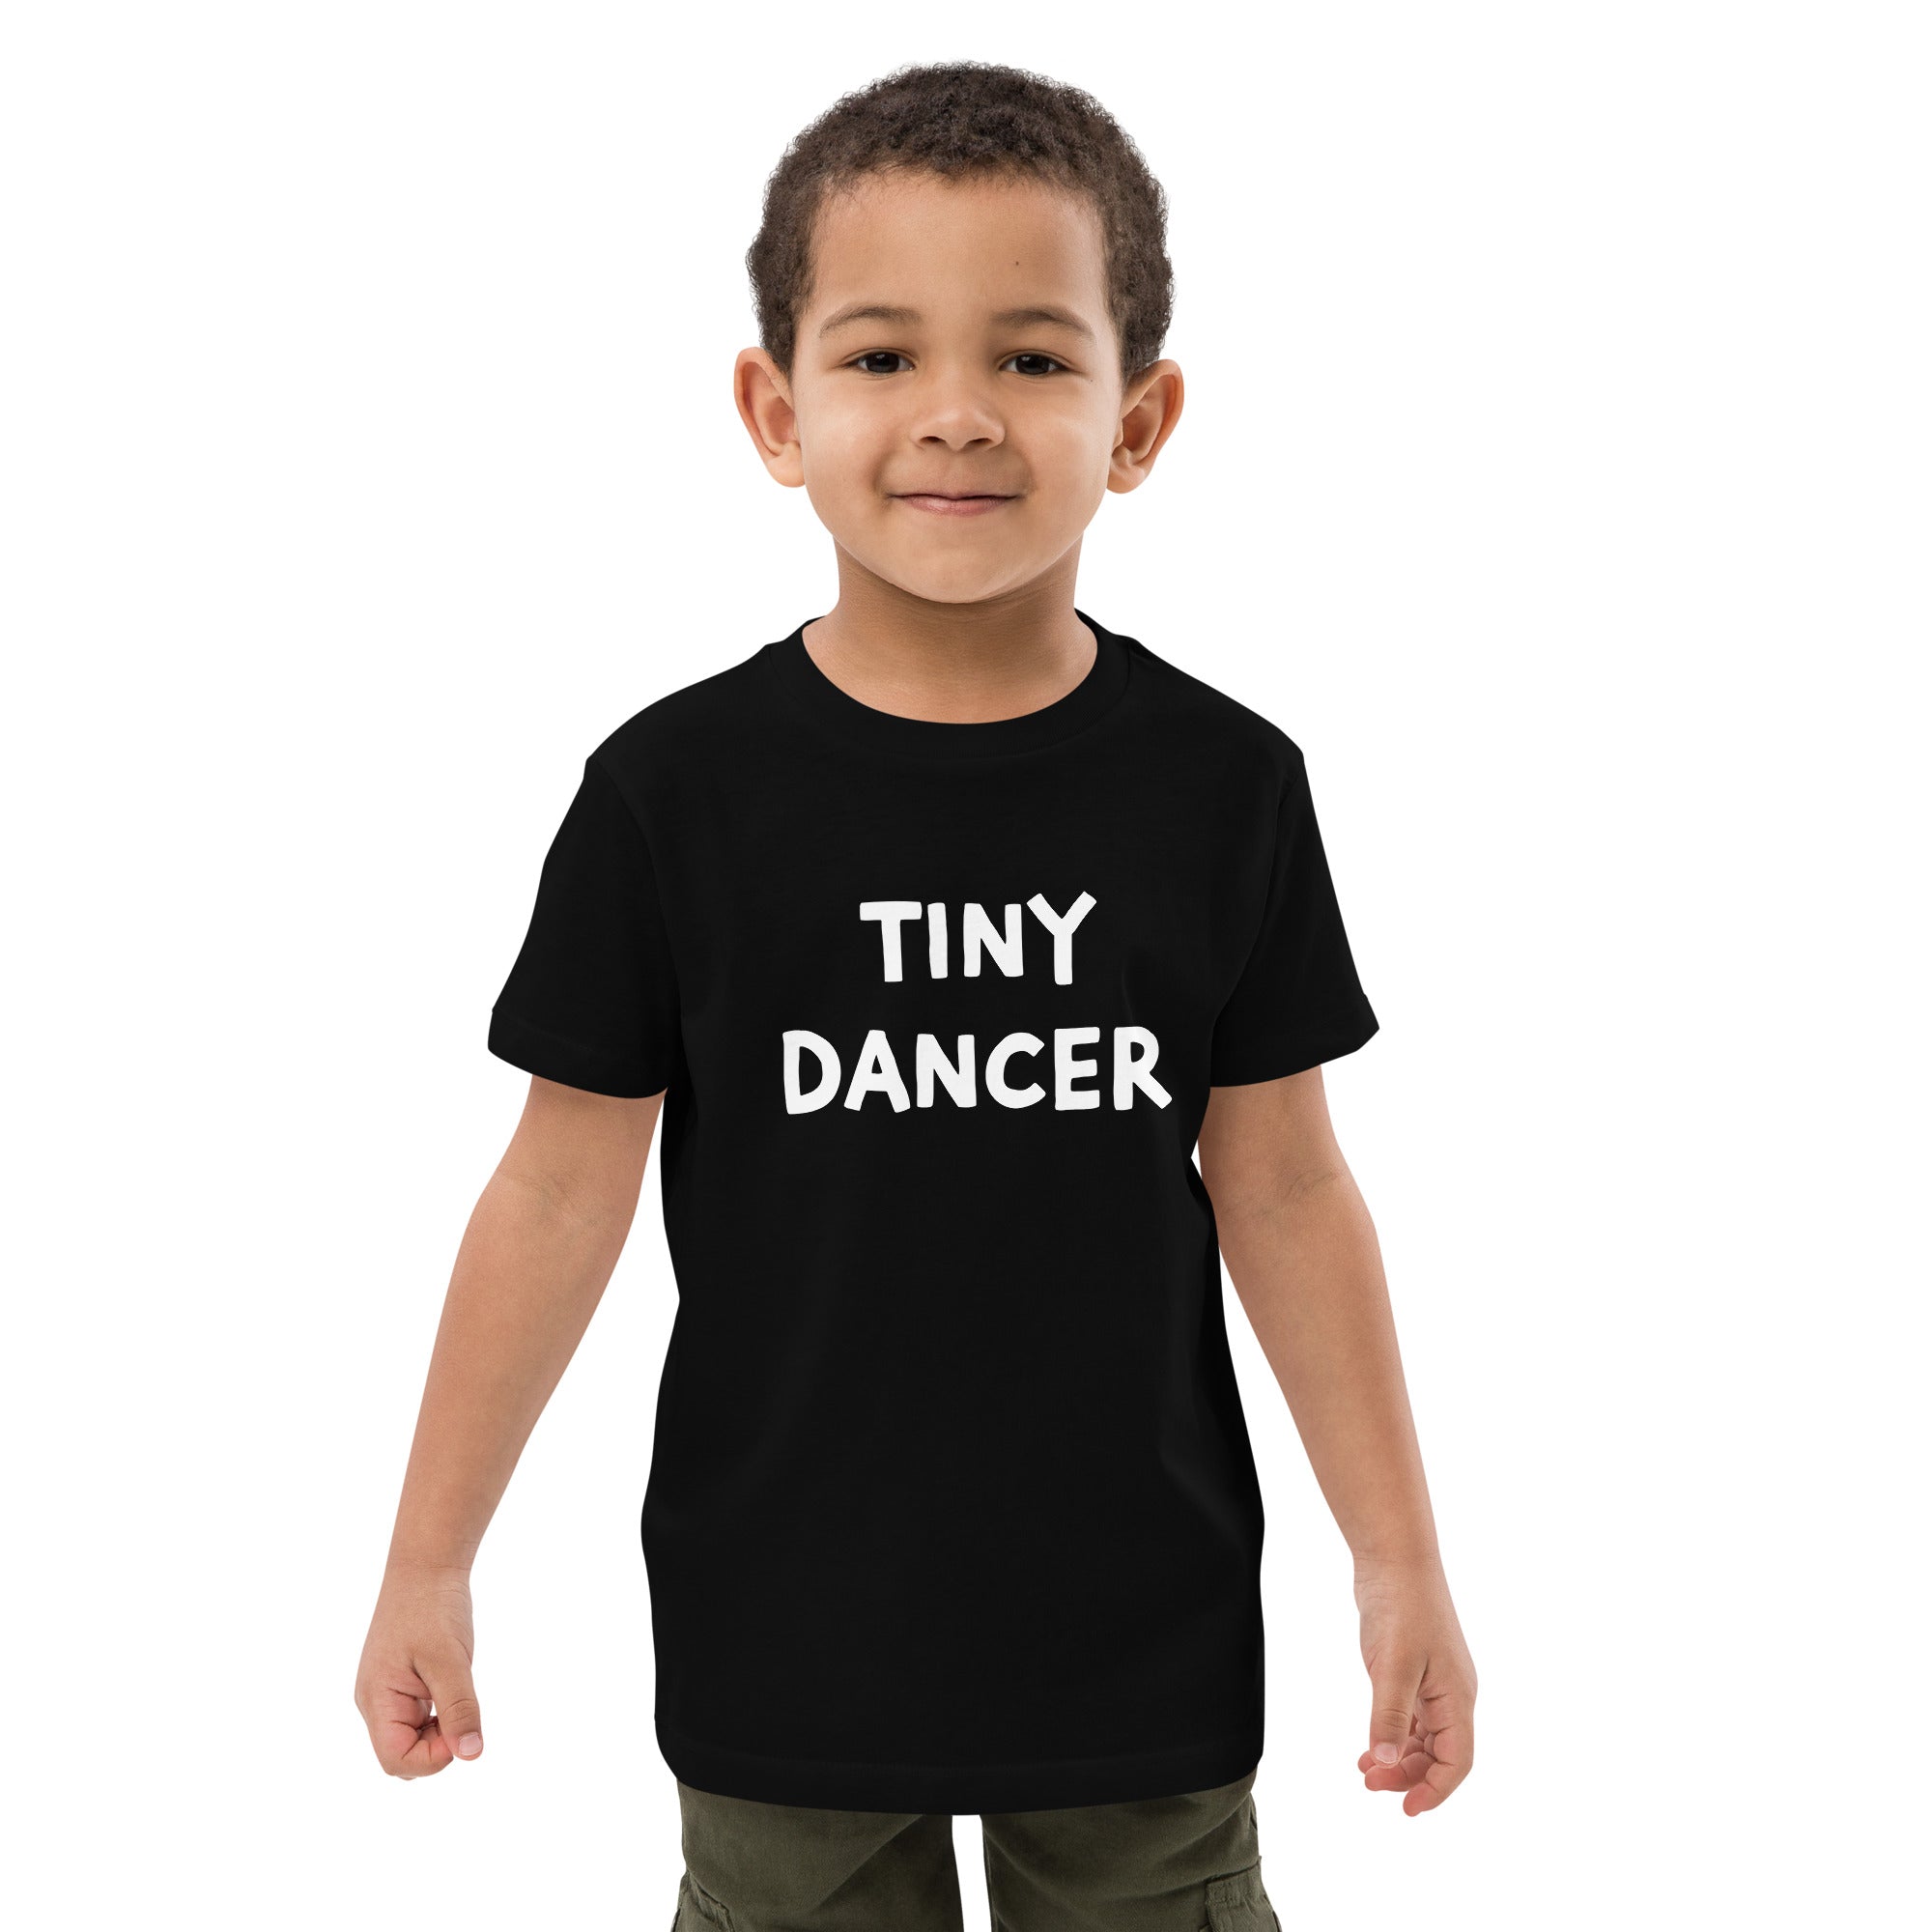 TINY DANCER Printed Organic cotton kids t-shirt